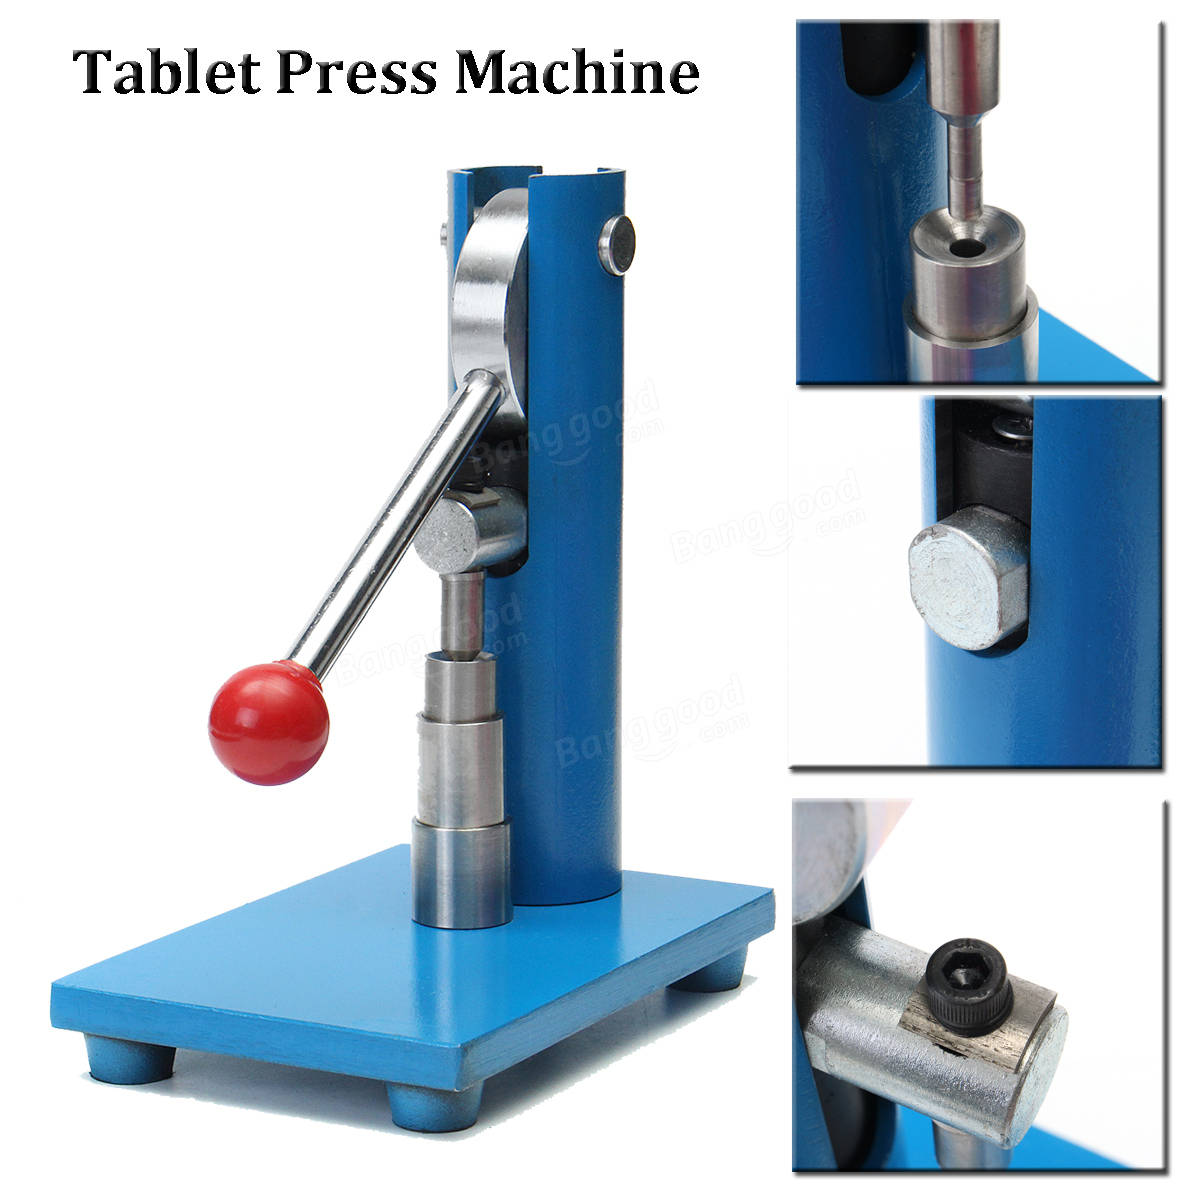 Make a press. Пресс для планшетов. Tablet Press Machine.